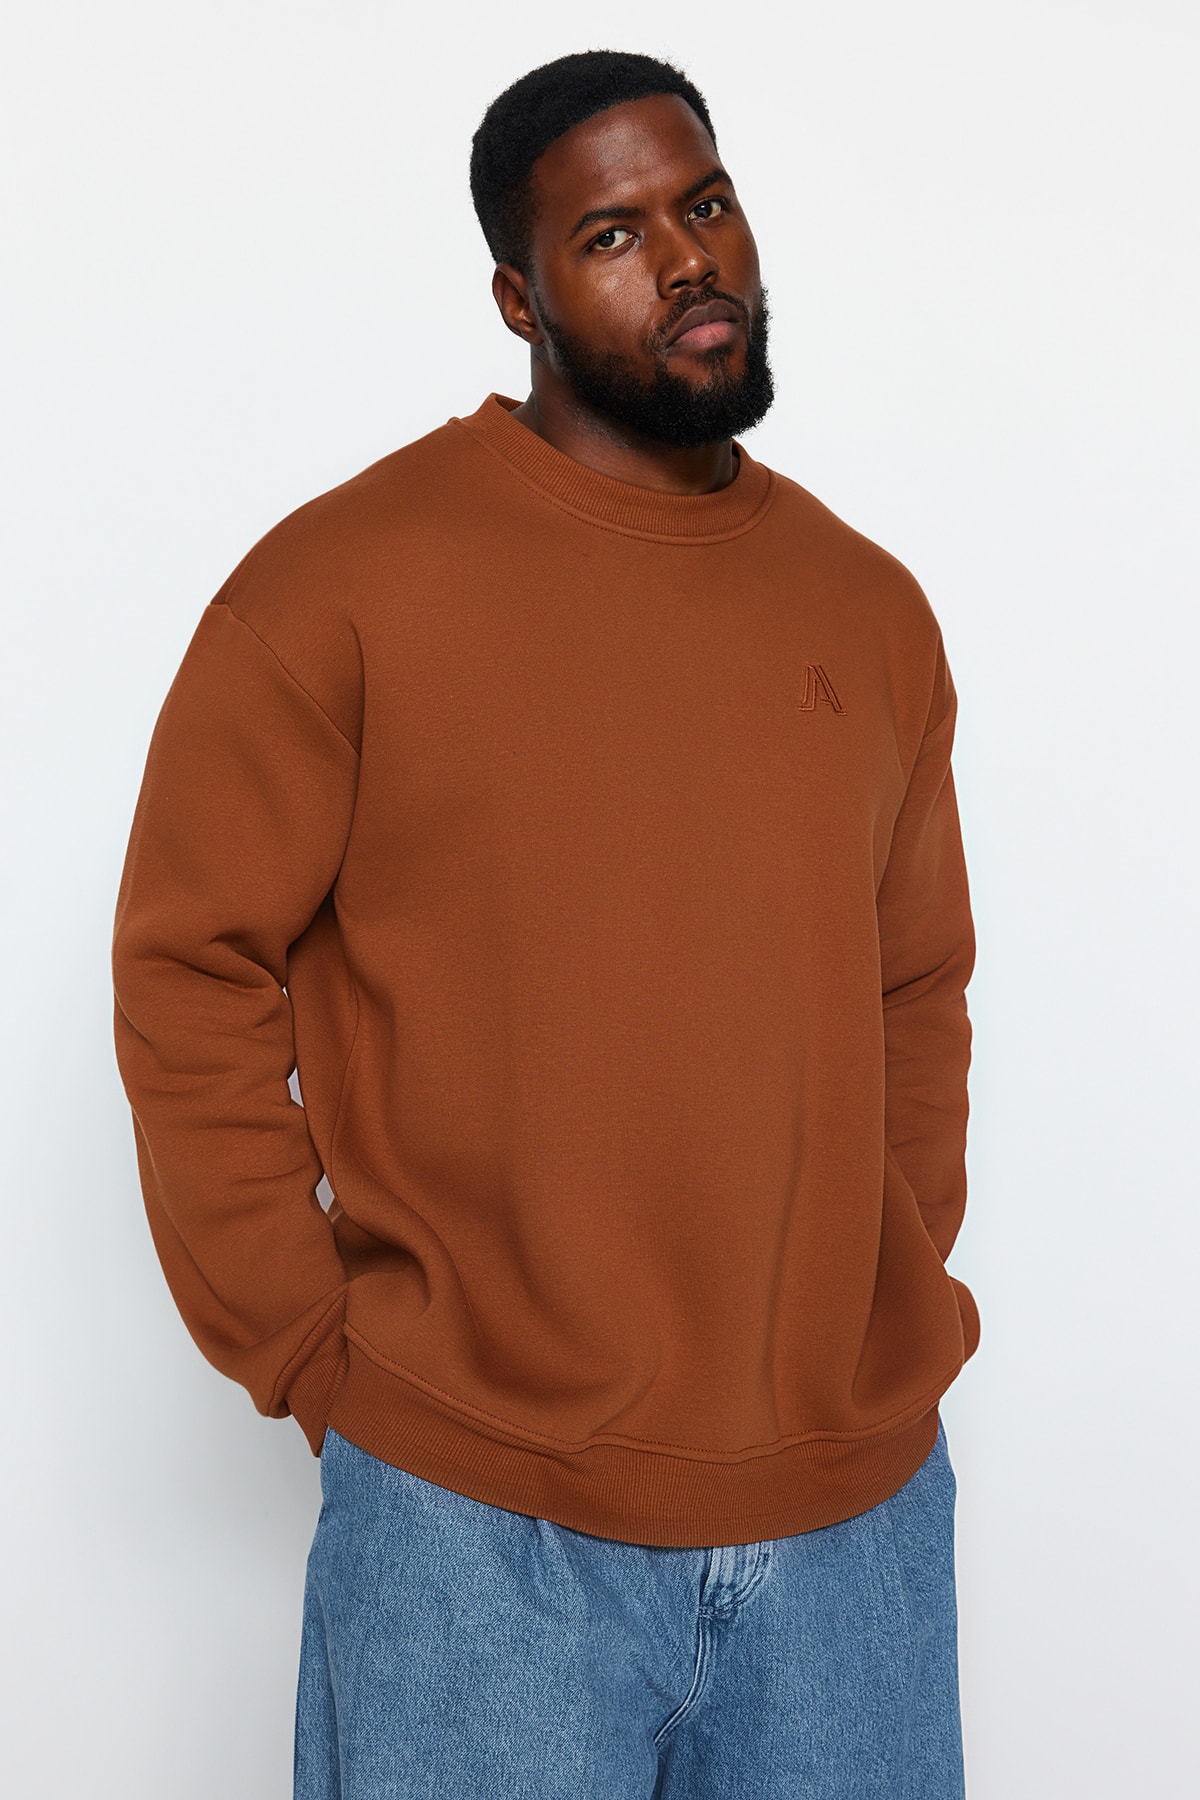 Trendyol Brown Men's Plus Size Relaxed/Comfortable Cut, Soft Pile Cotton Sweatshirt